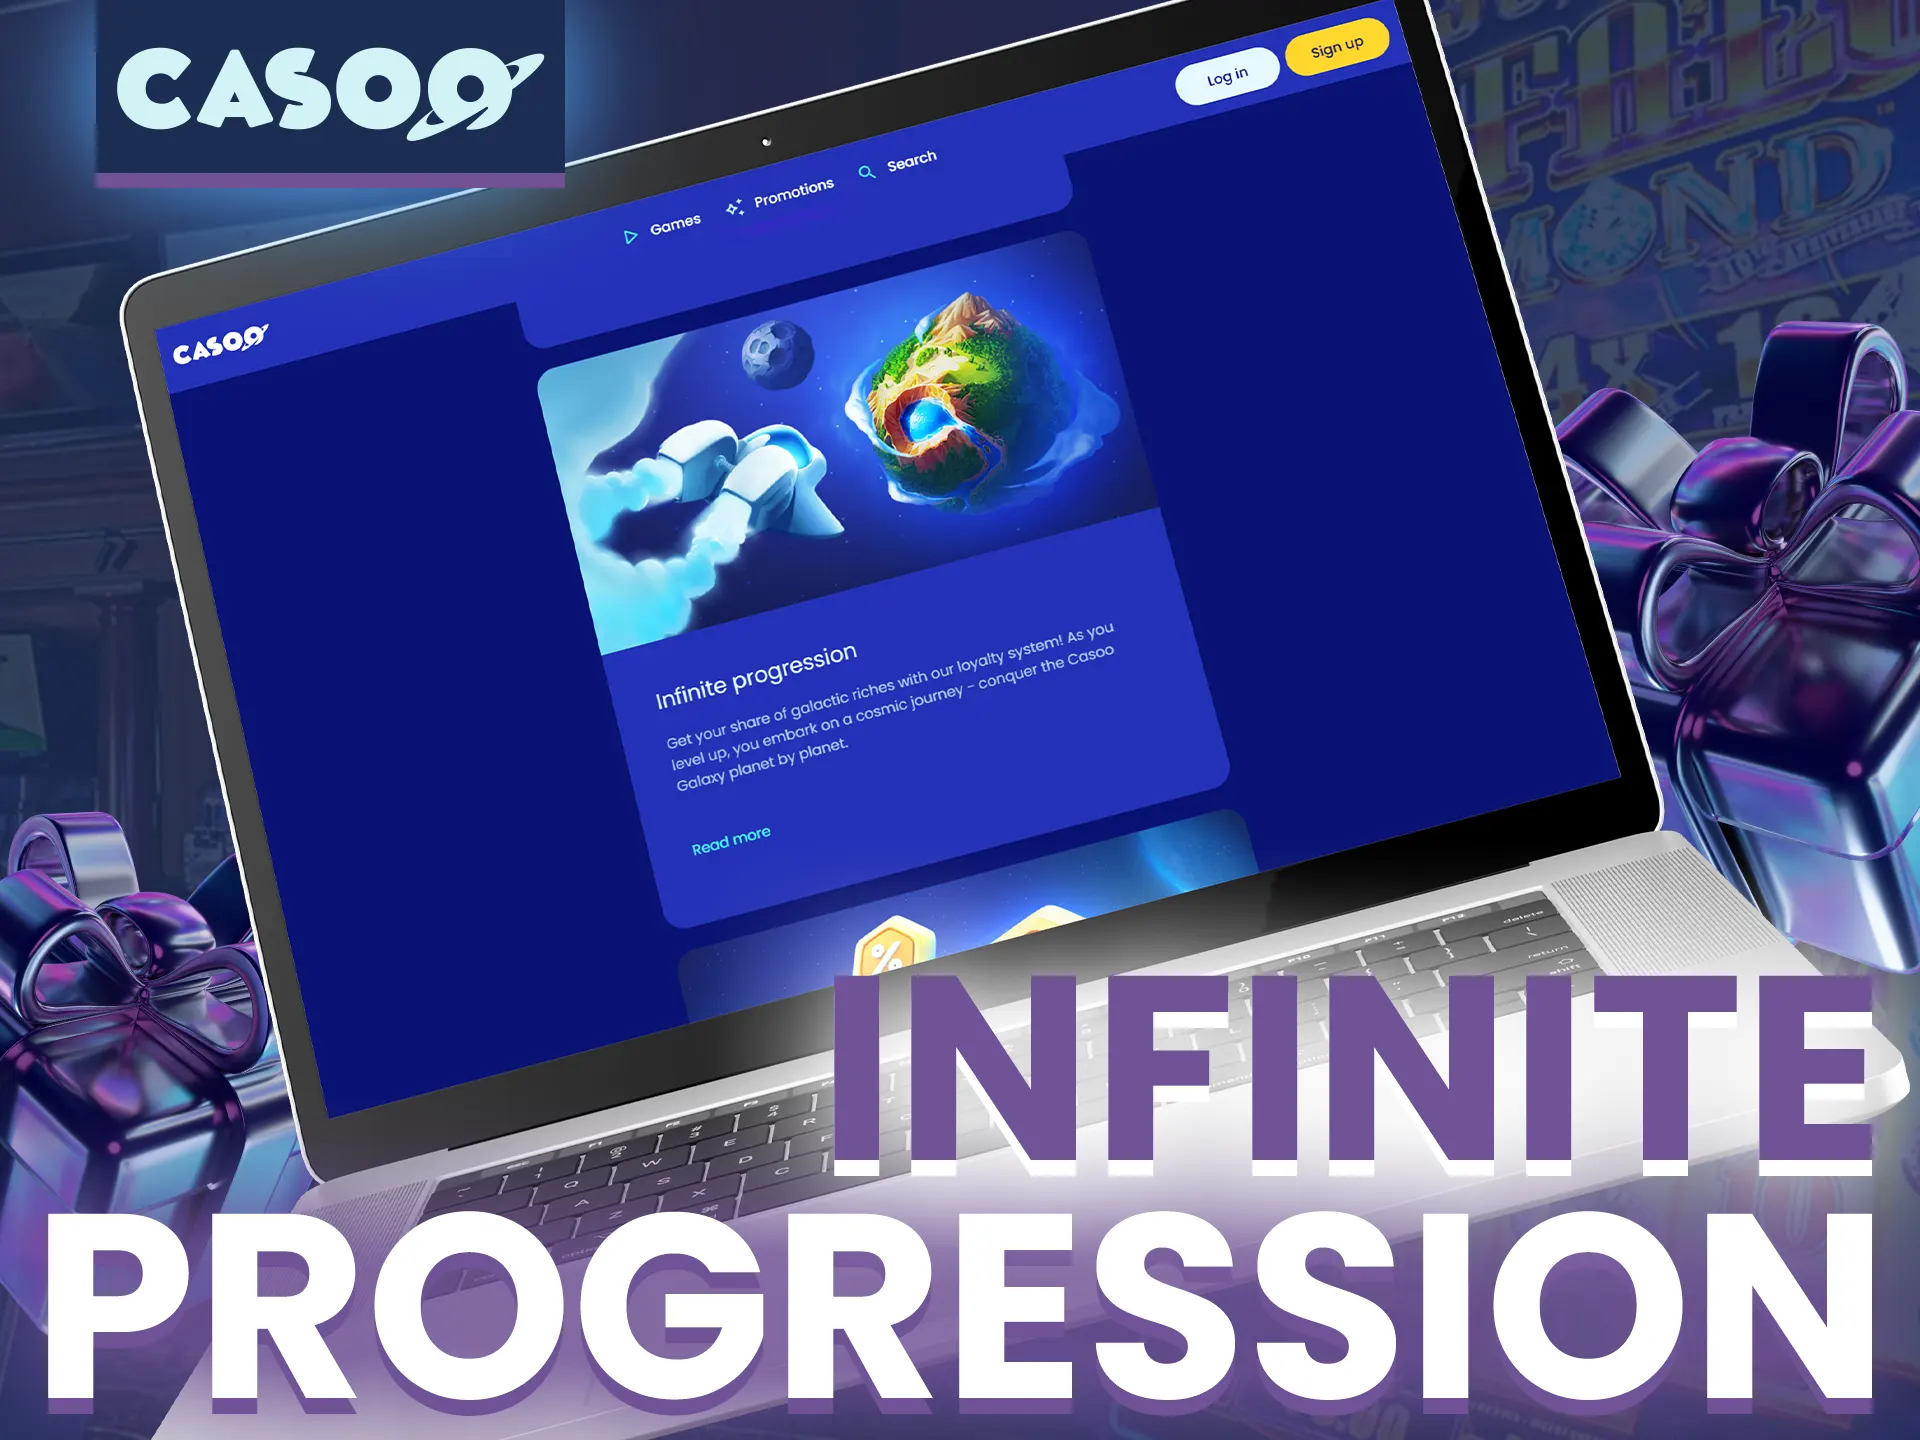 Take advantage of Casoo Casino Infinite Progression.